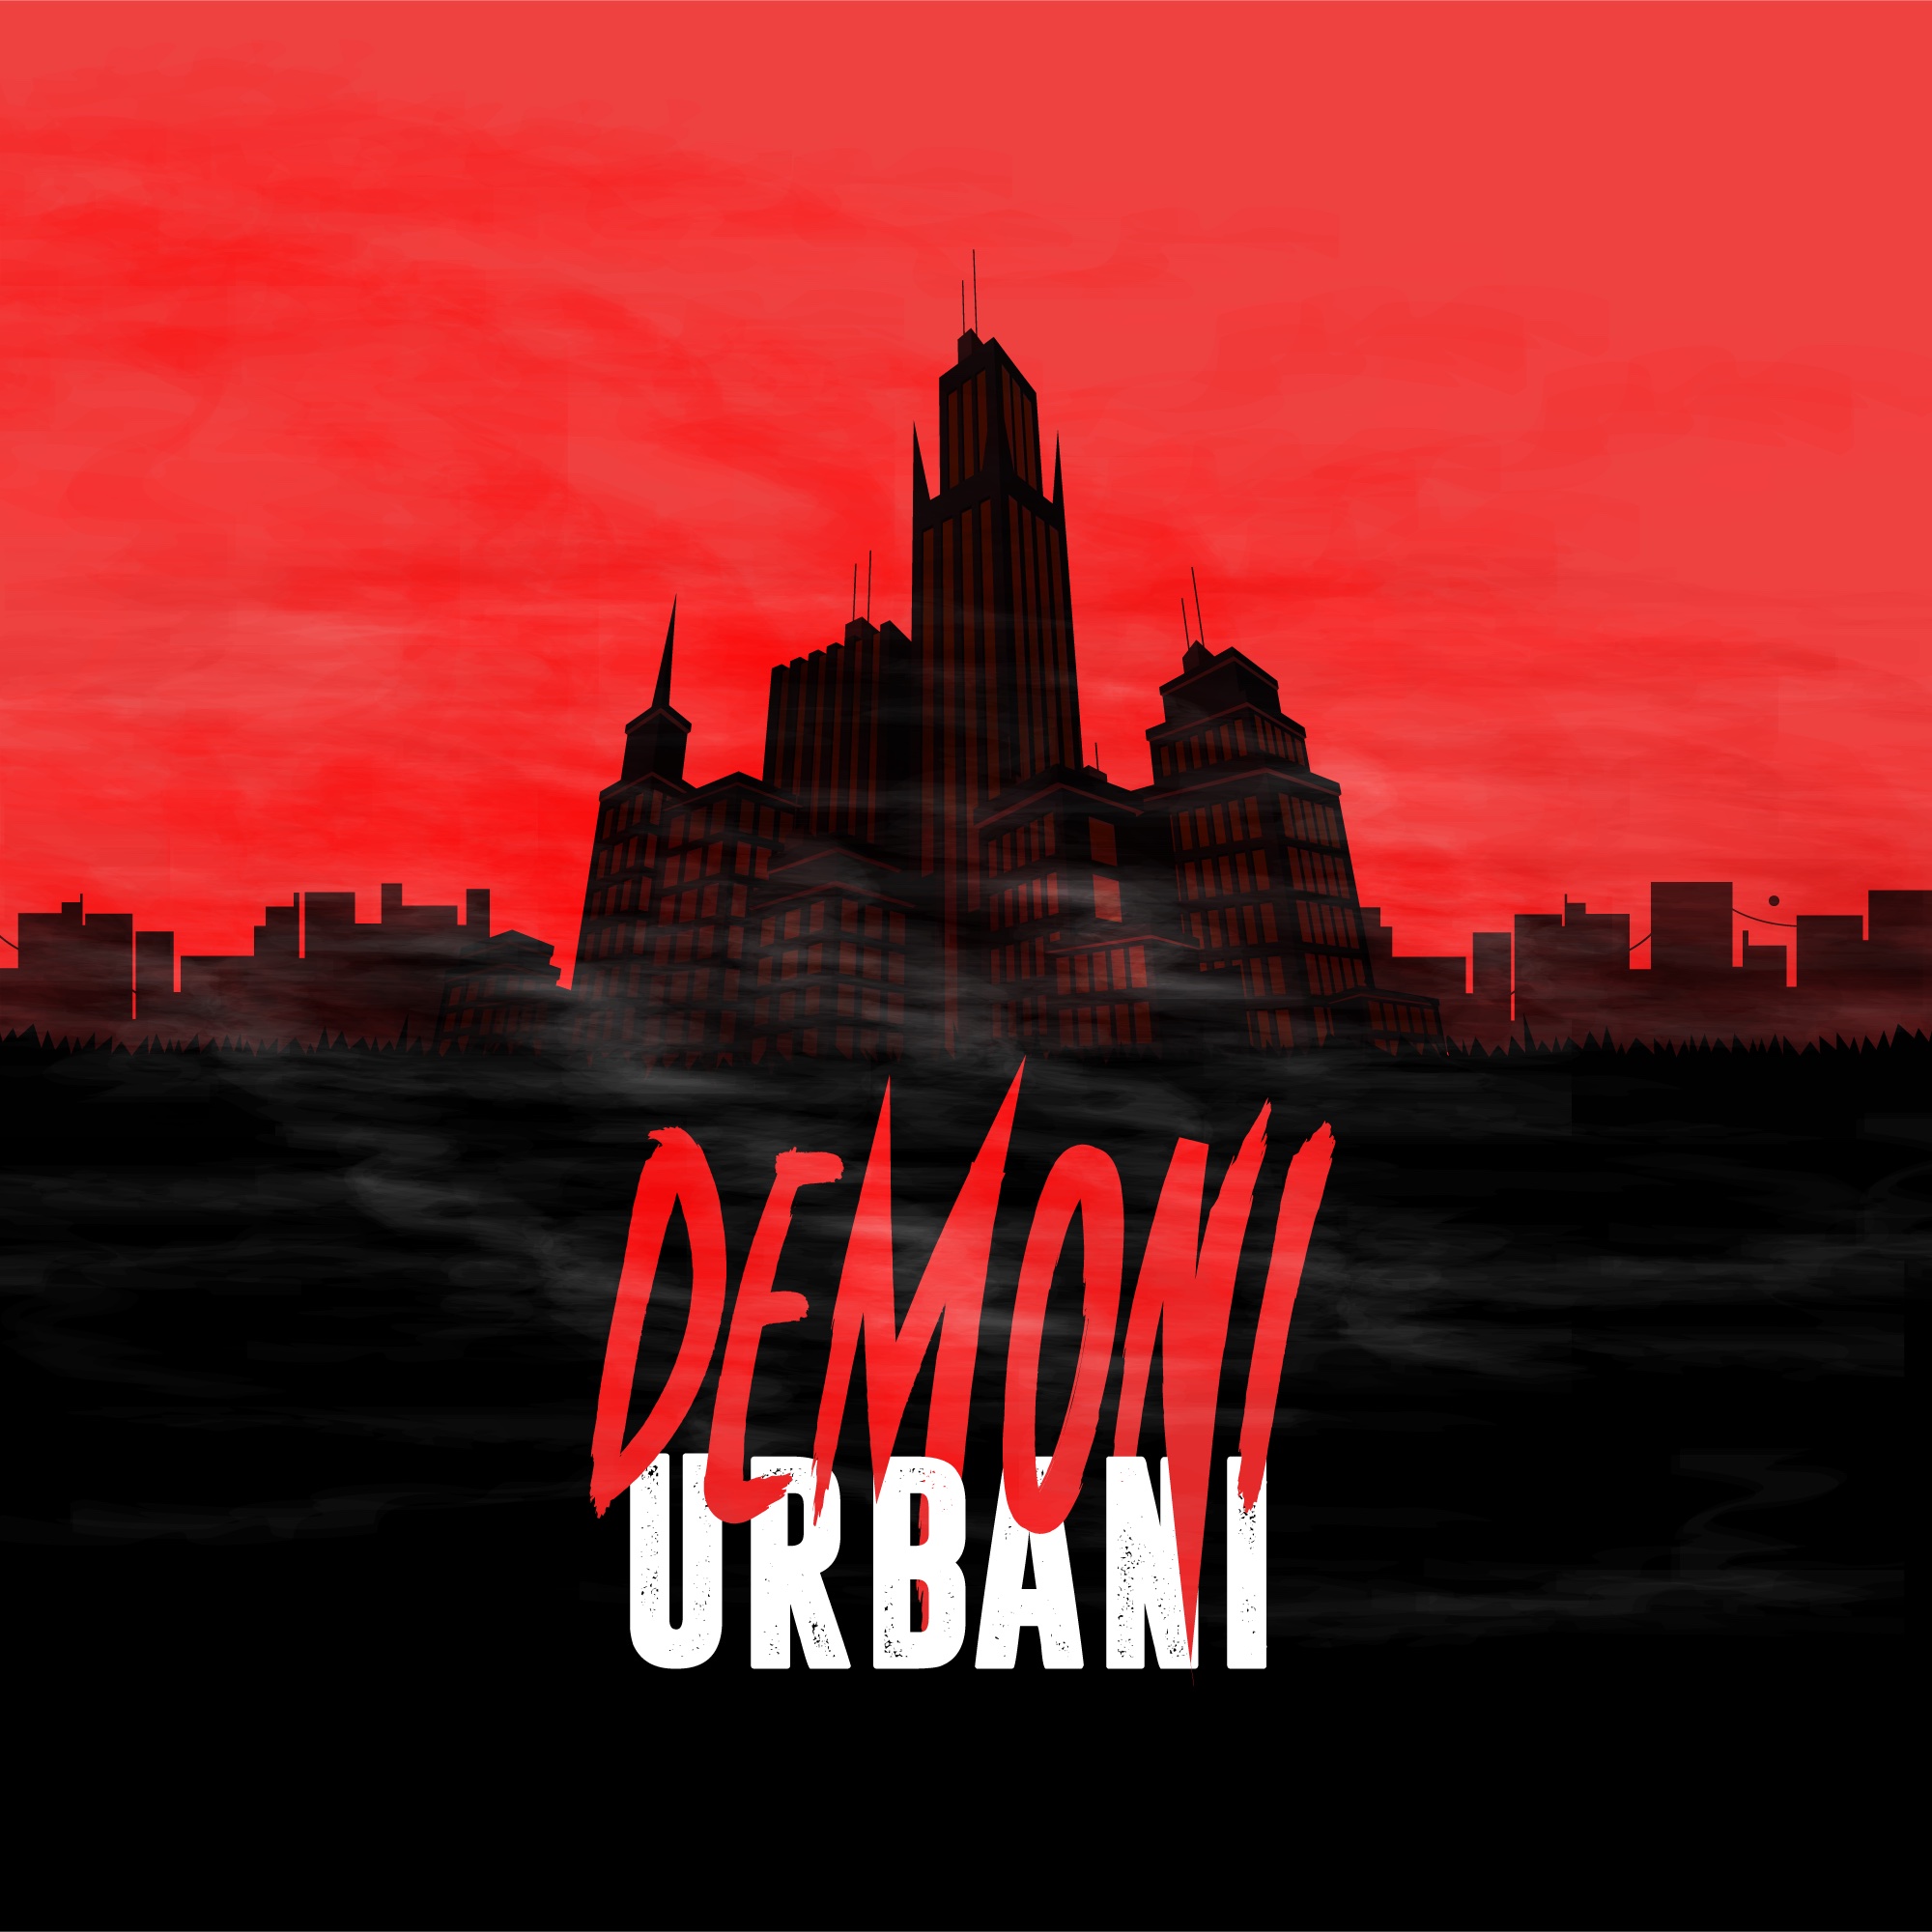 Demoni urbani, al via la seconda stagione dei podcast dedicati al crimine